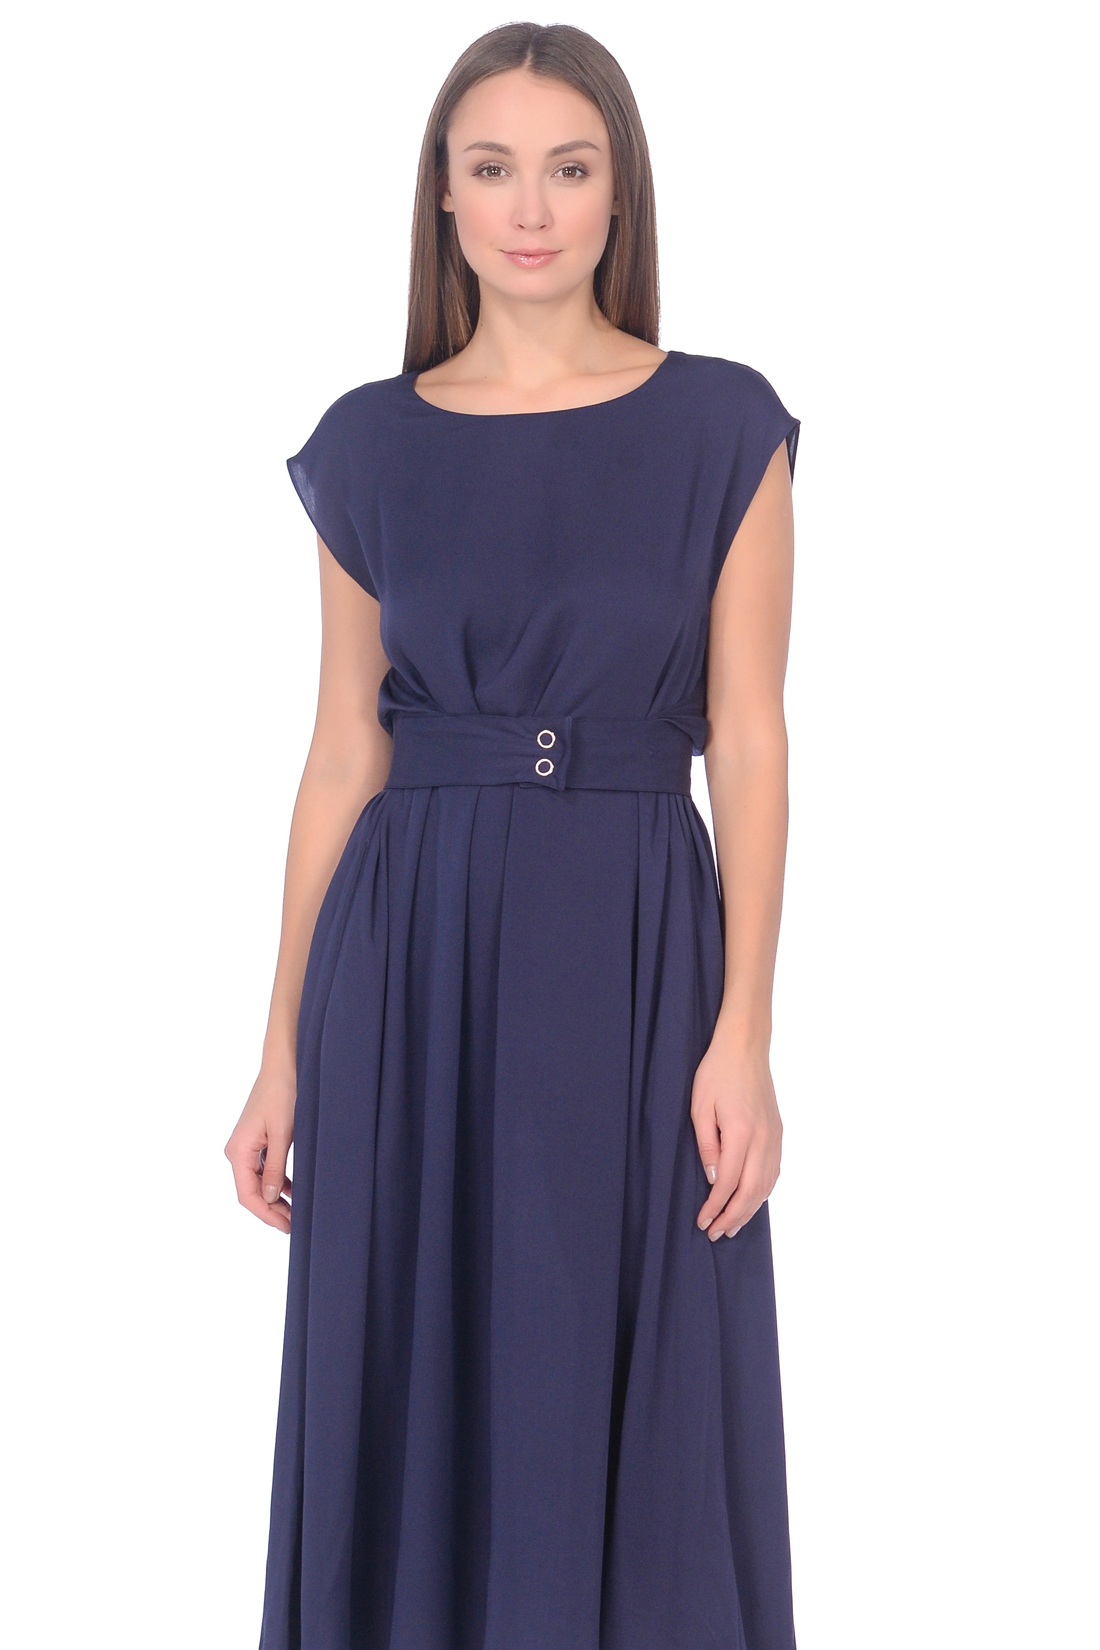 Платье с вшитым поясом (арт. baon B459066), размер L, цвет синий Платье с вшитым поясом (арт. baon B459066) - фото 3